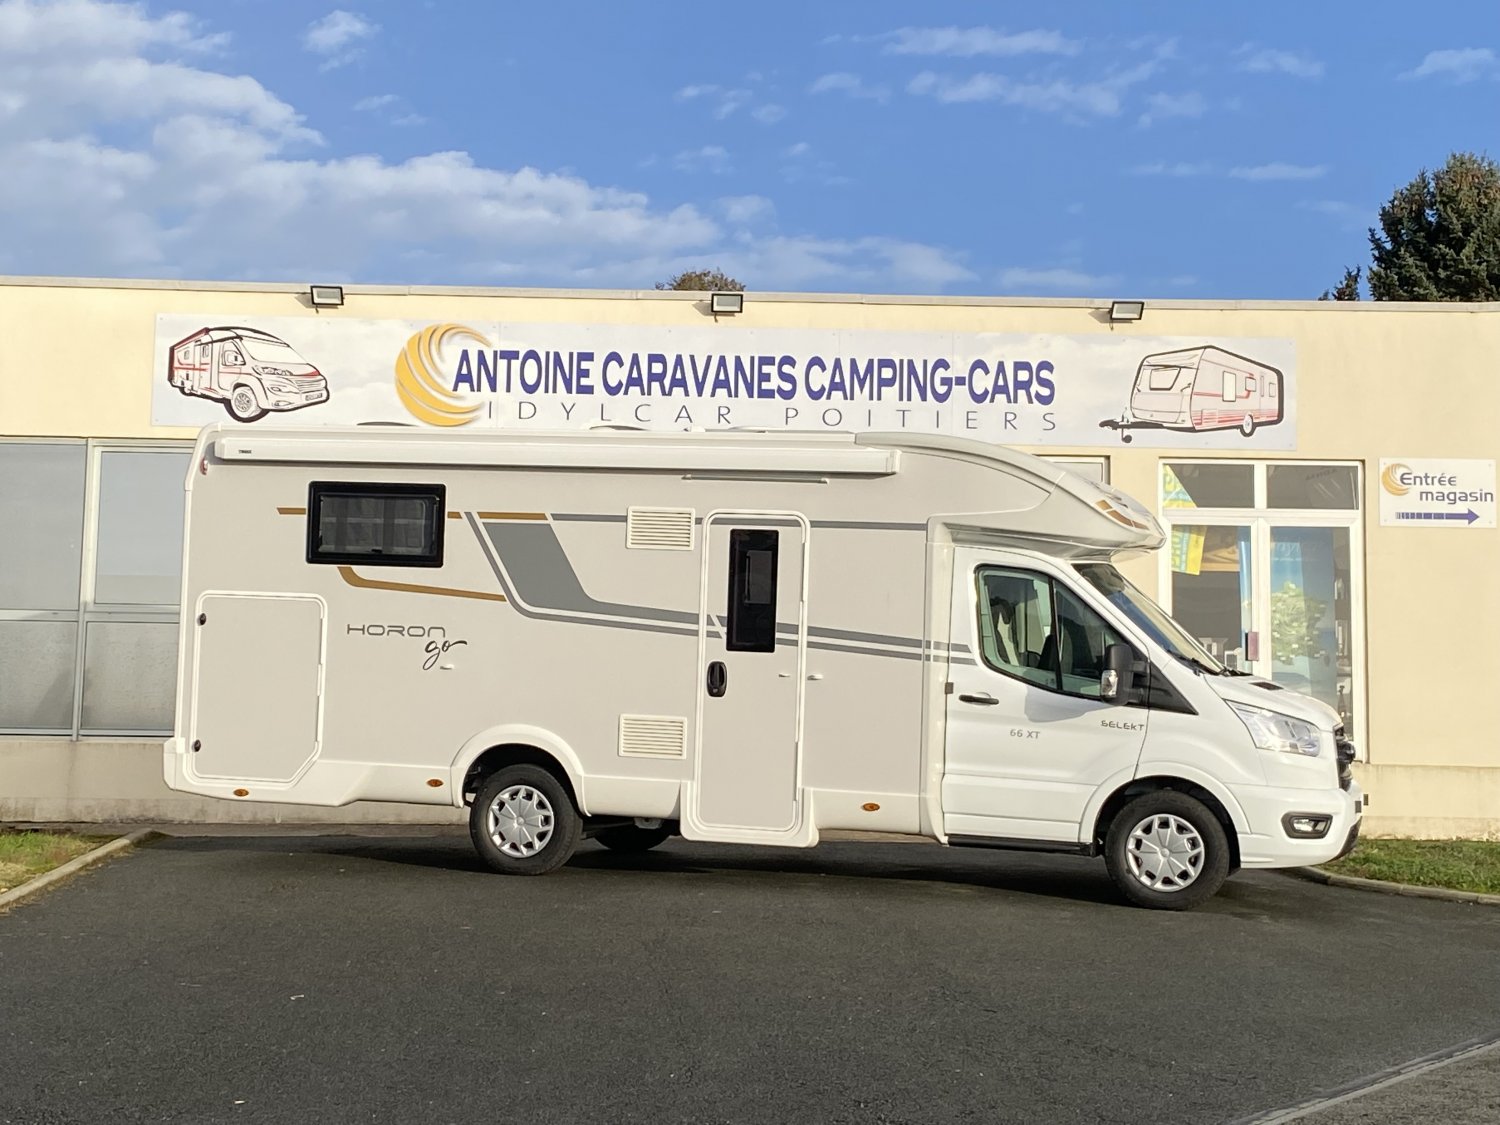 Antoine Caravanes et Camping Car - C.I. Horon GO 66 XT à 73 140€€